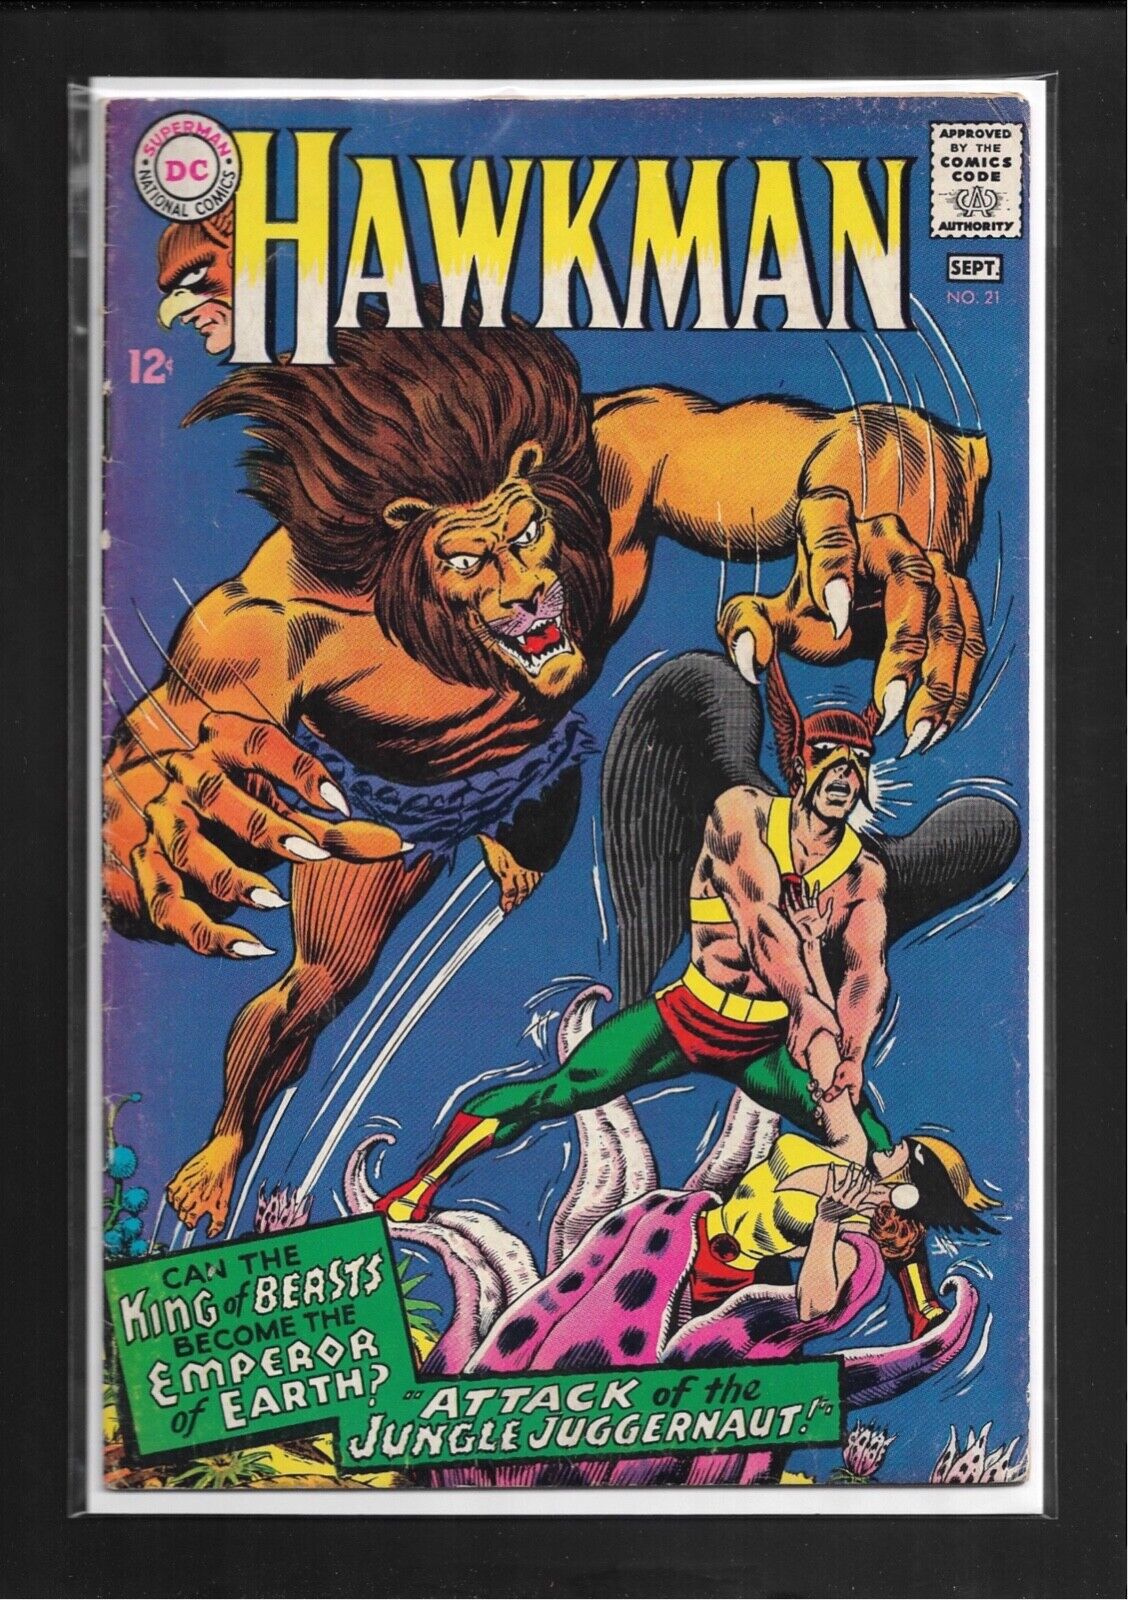 Hawkman #21 (1967): 